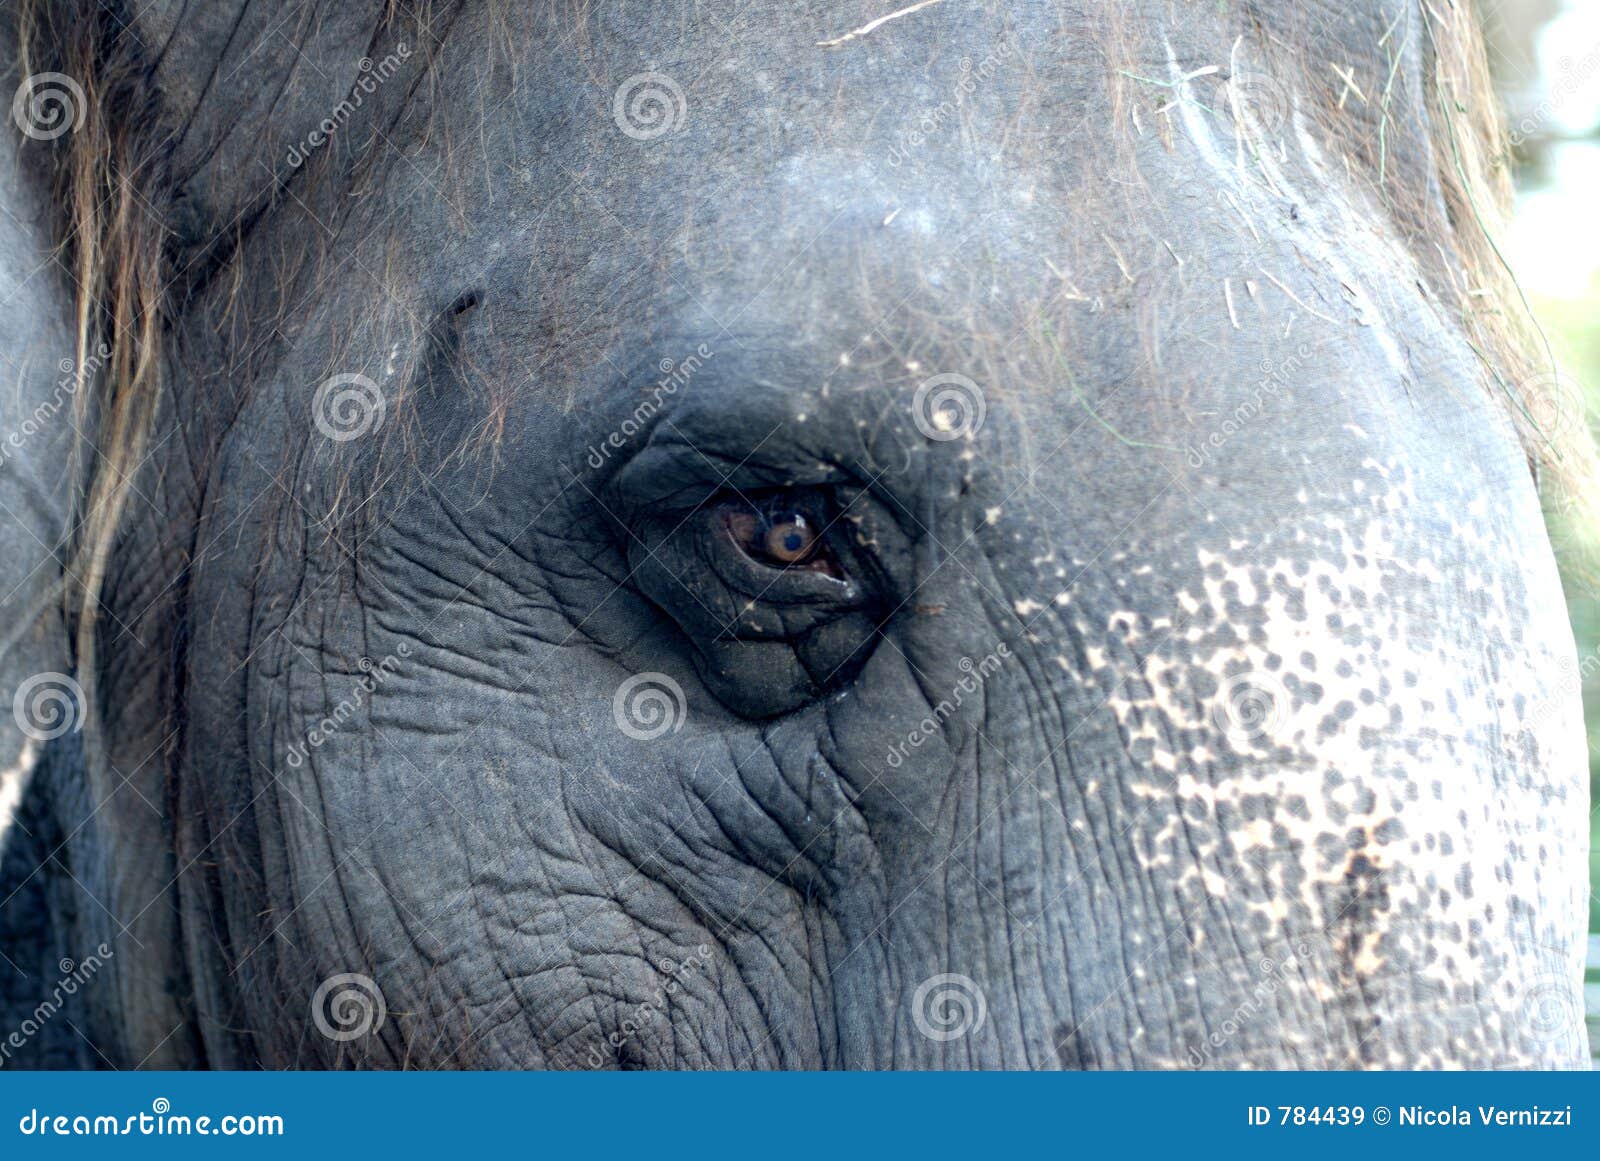 Elefant 03. Auge